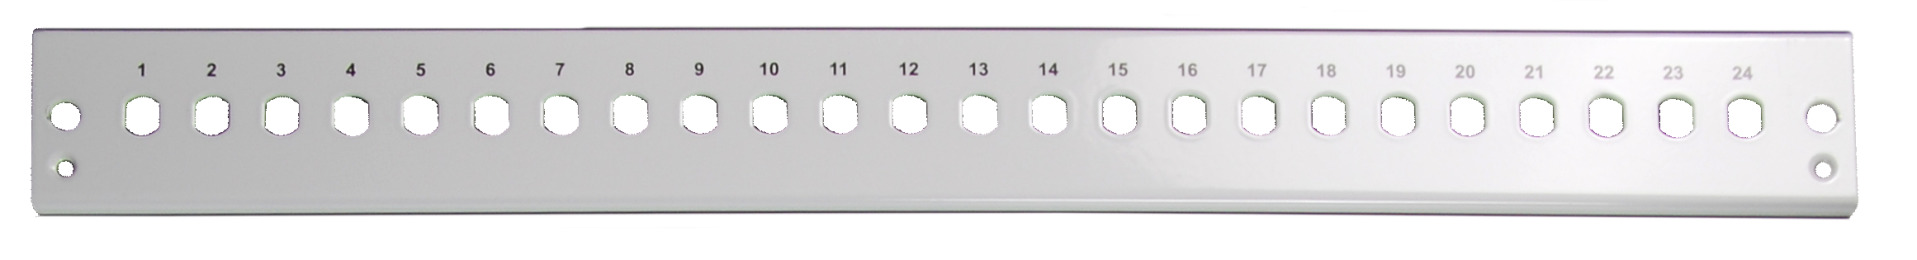 Front panel 24 x ST/FC (D-hole), grey